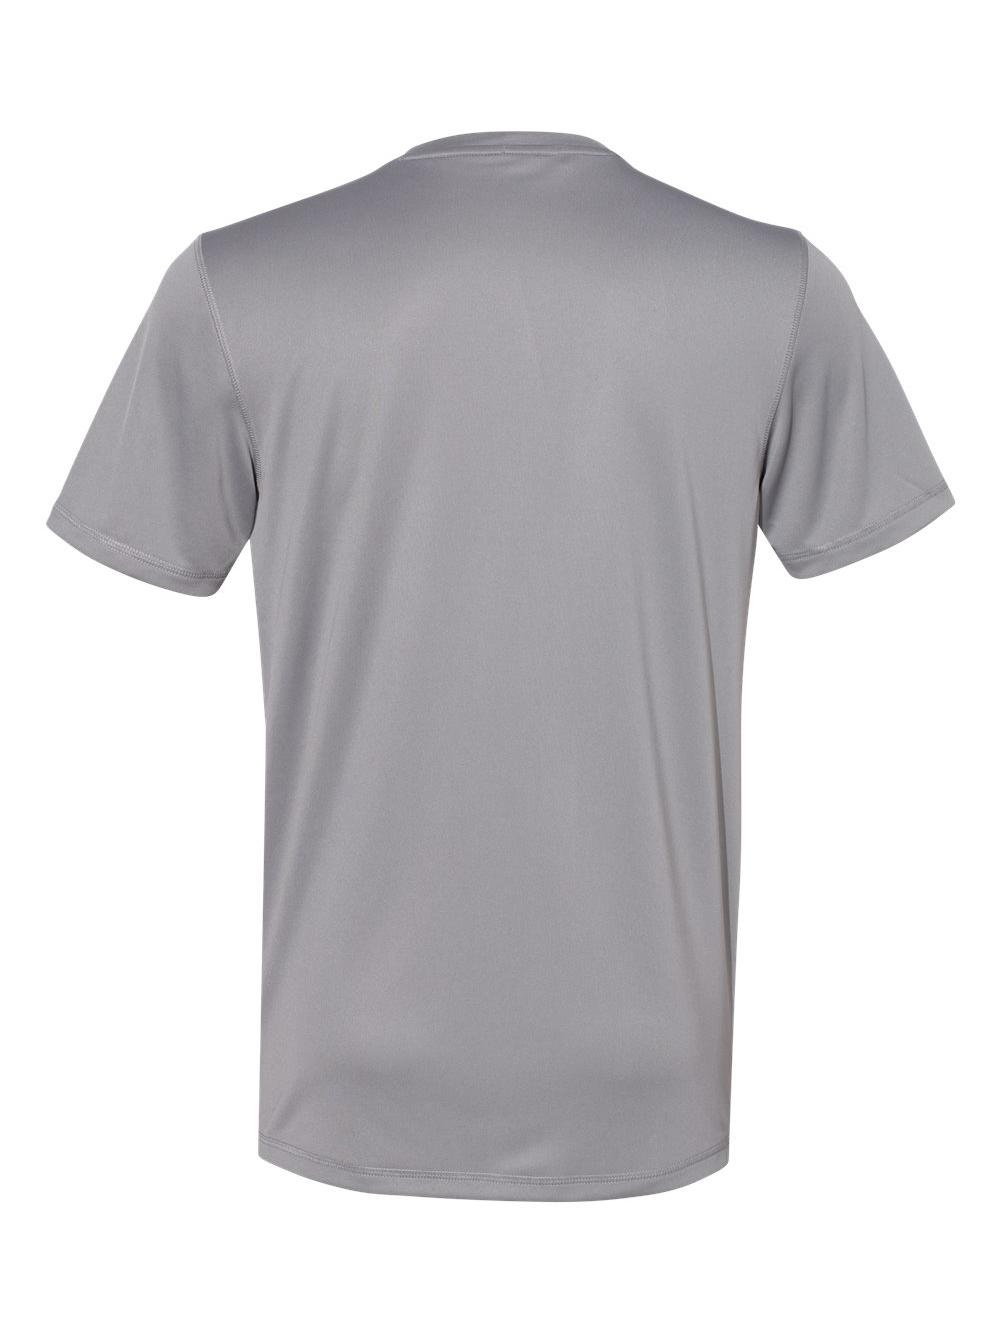 Adidas - Sport T-Shirt - A376 - Grey Three - Size: M - image 3 of 3